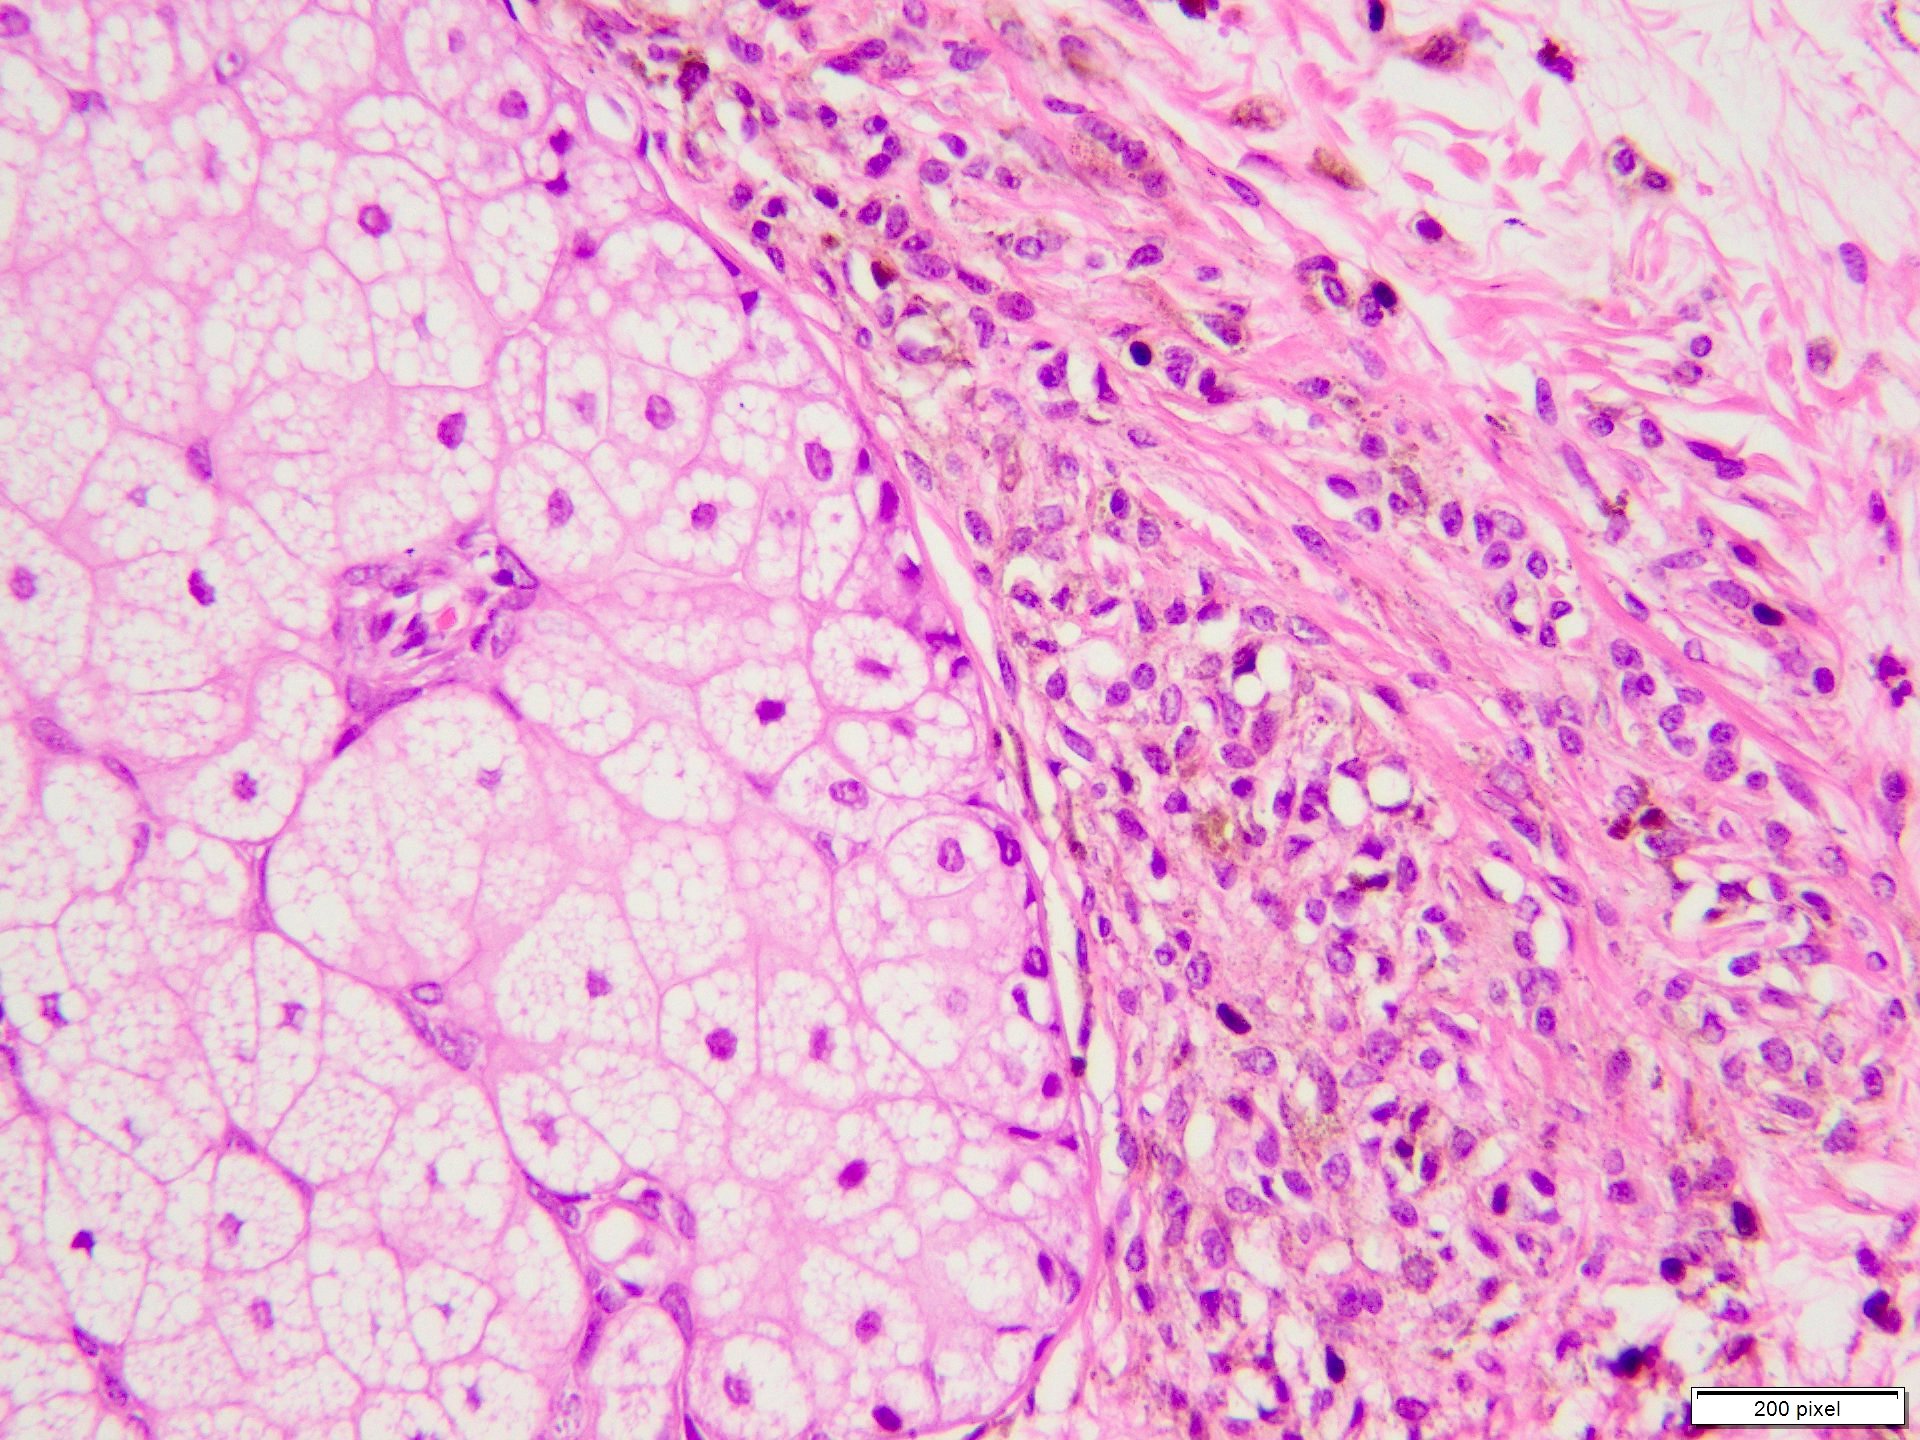 Background nevus cell around sebaceous units